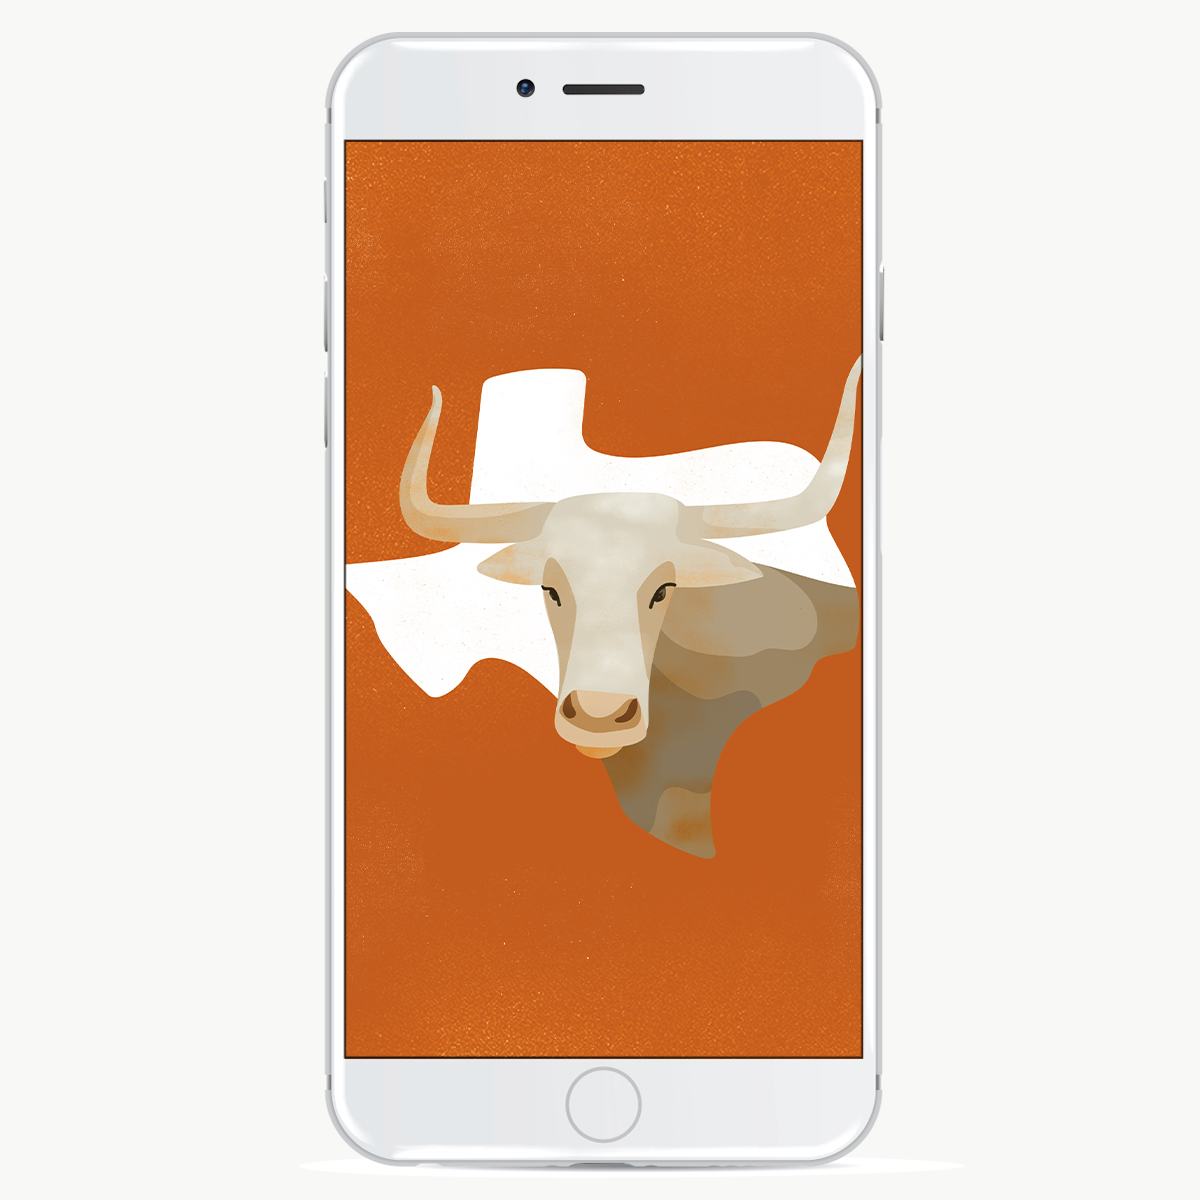 Bevo Texas - Smartphone , HD Wallpaper & Backgrounds